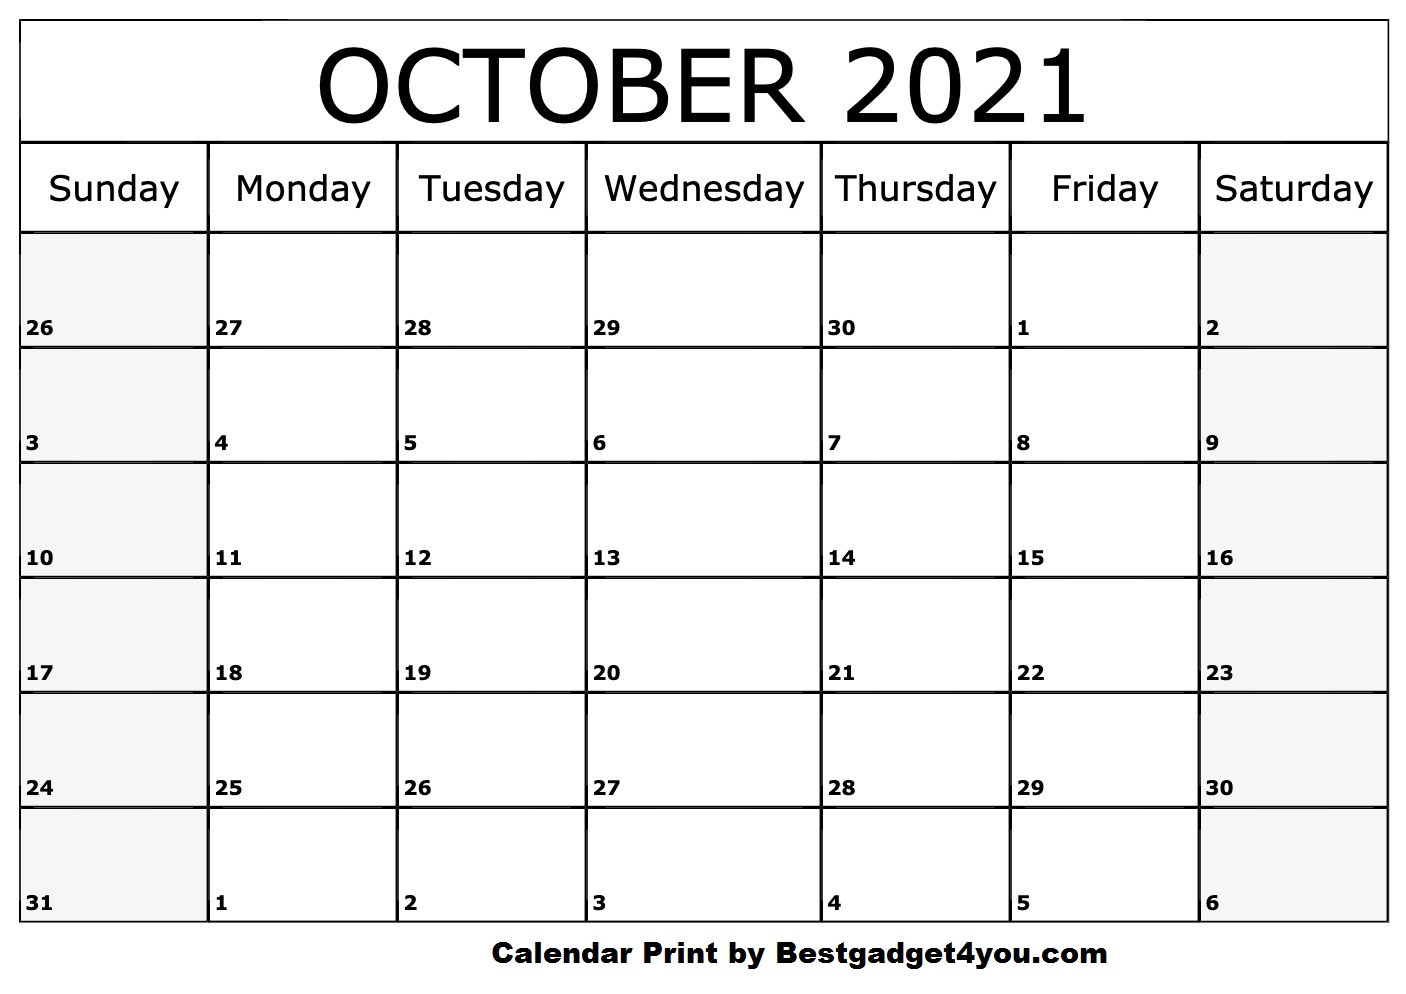 Calendar October 2021 Printable | Calendar 2021-Oct Calendar 2021 Beta Calendars